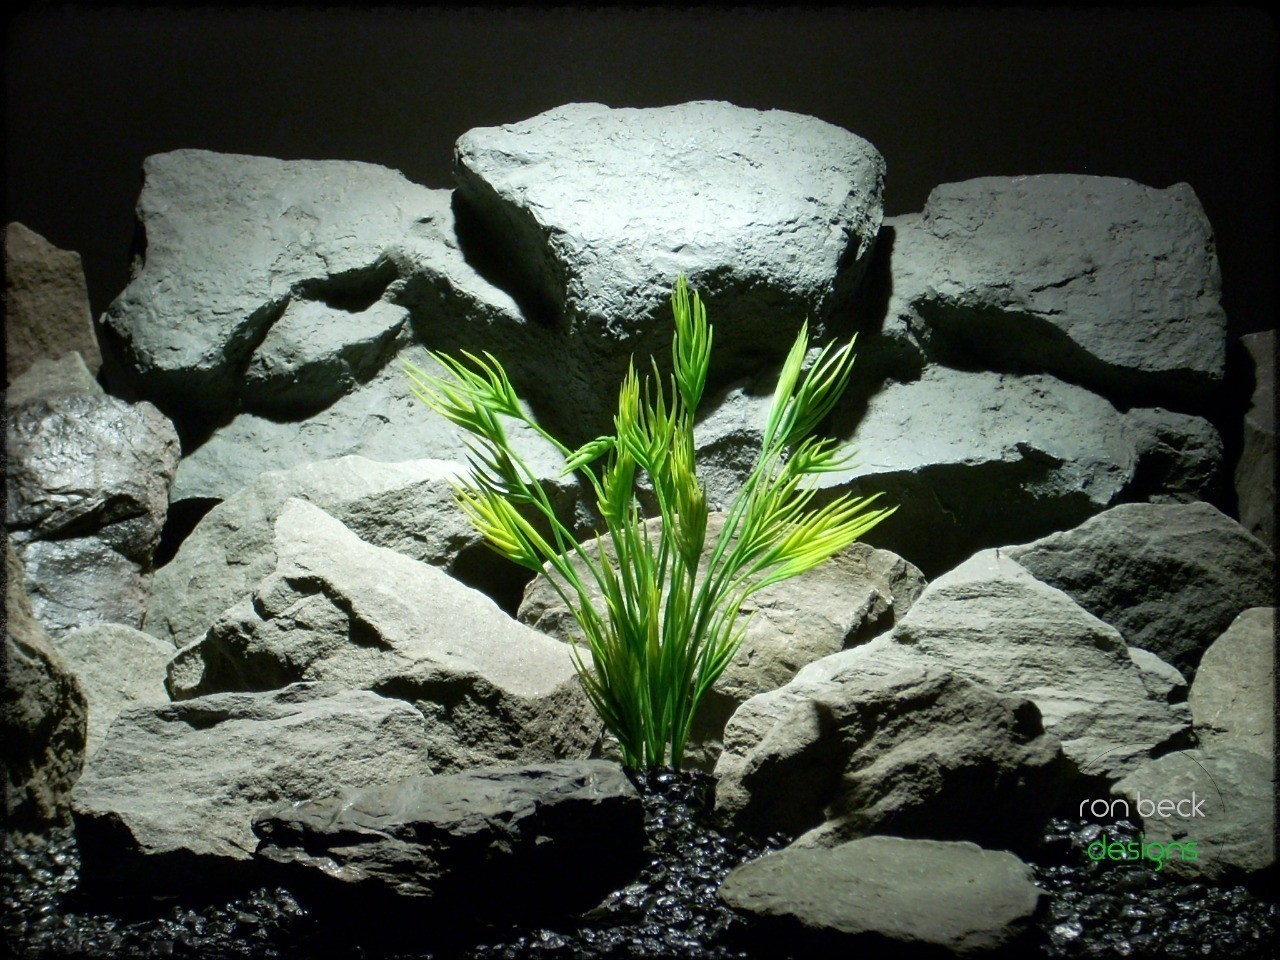 aquarium decor plant - mermaid grass from ron beck designs pap223